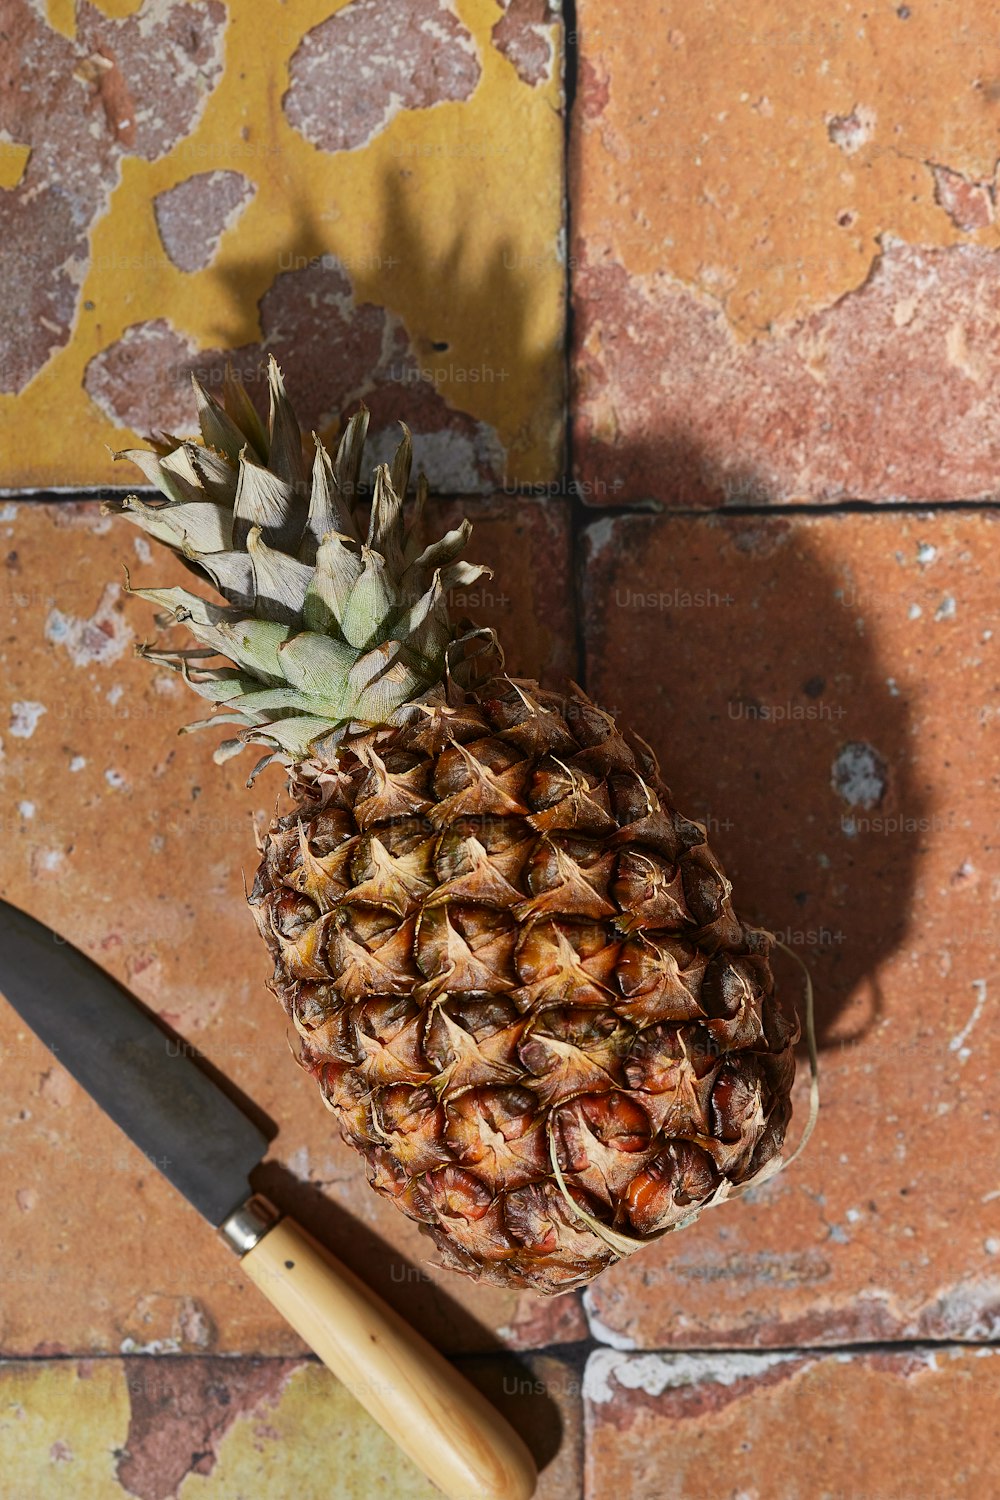 un ananas seduto sopra un tavolo accanto a un coltello